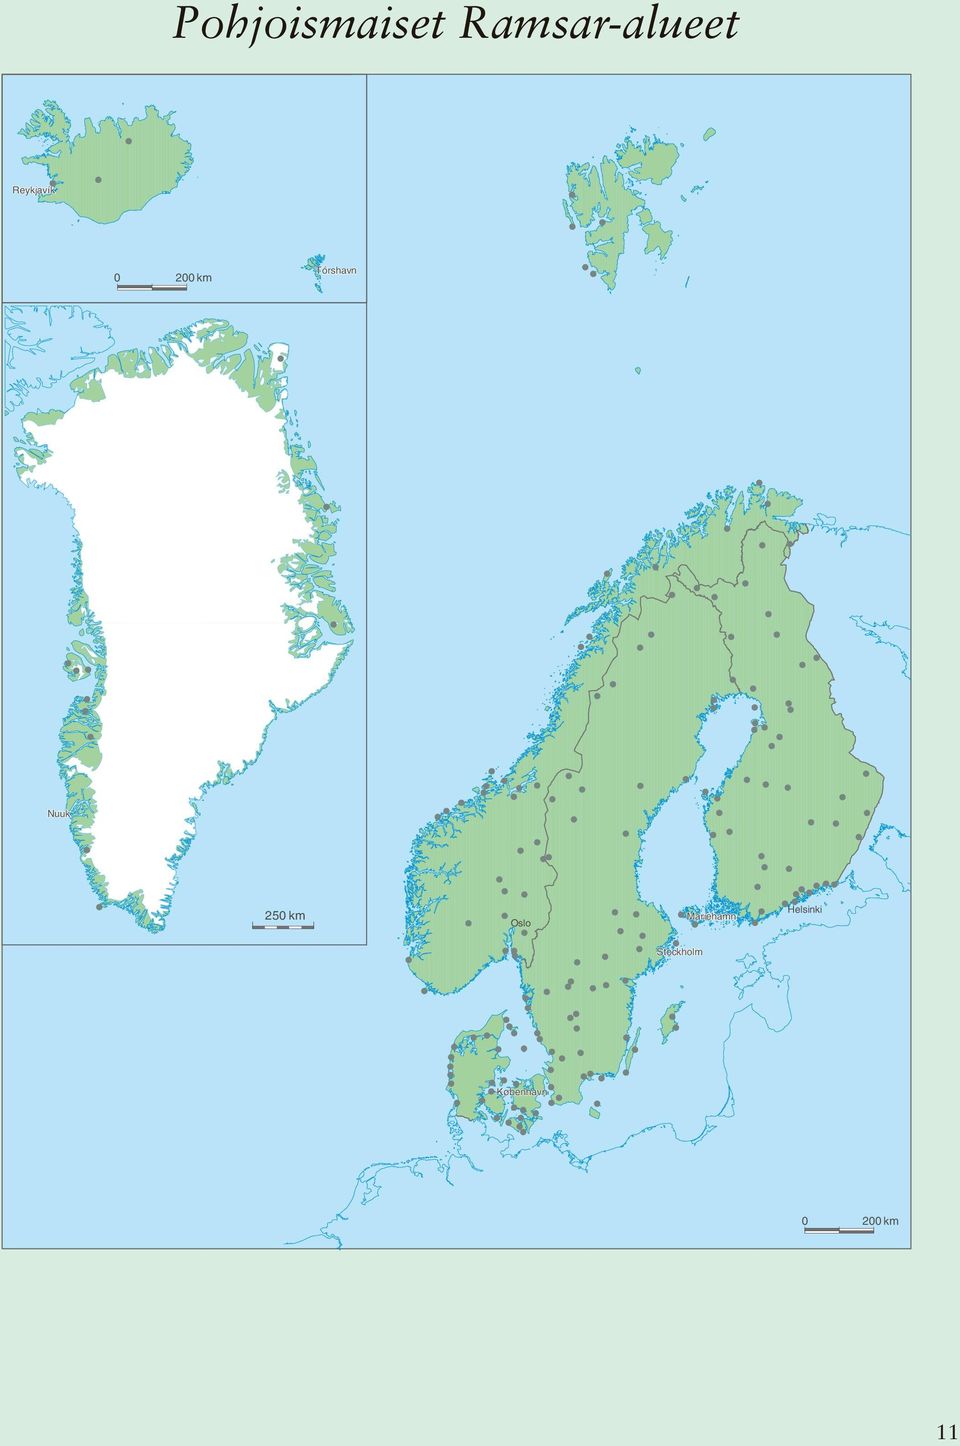 skrifter 0 200 km Nuuk 250 km Oslo